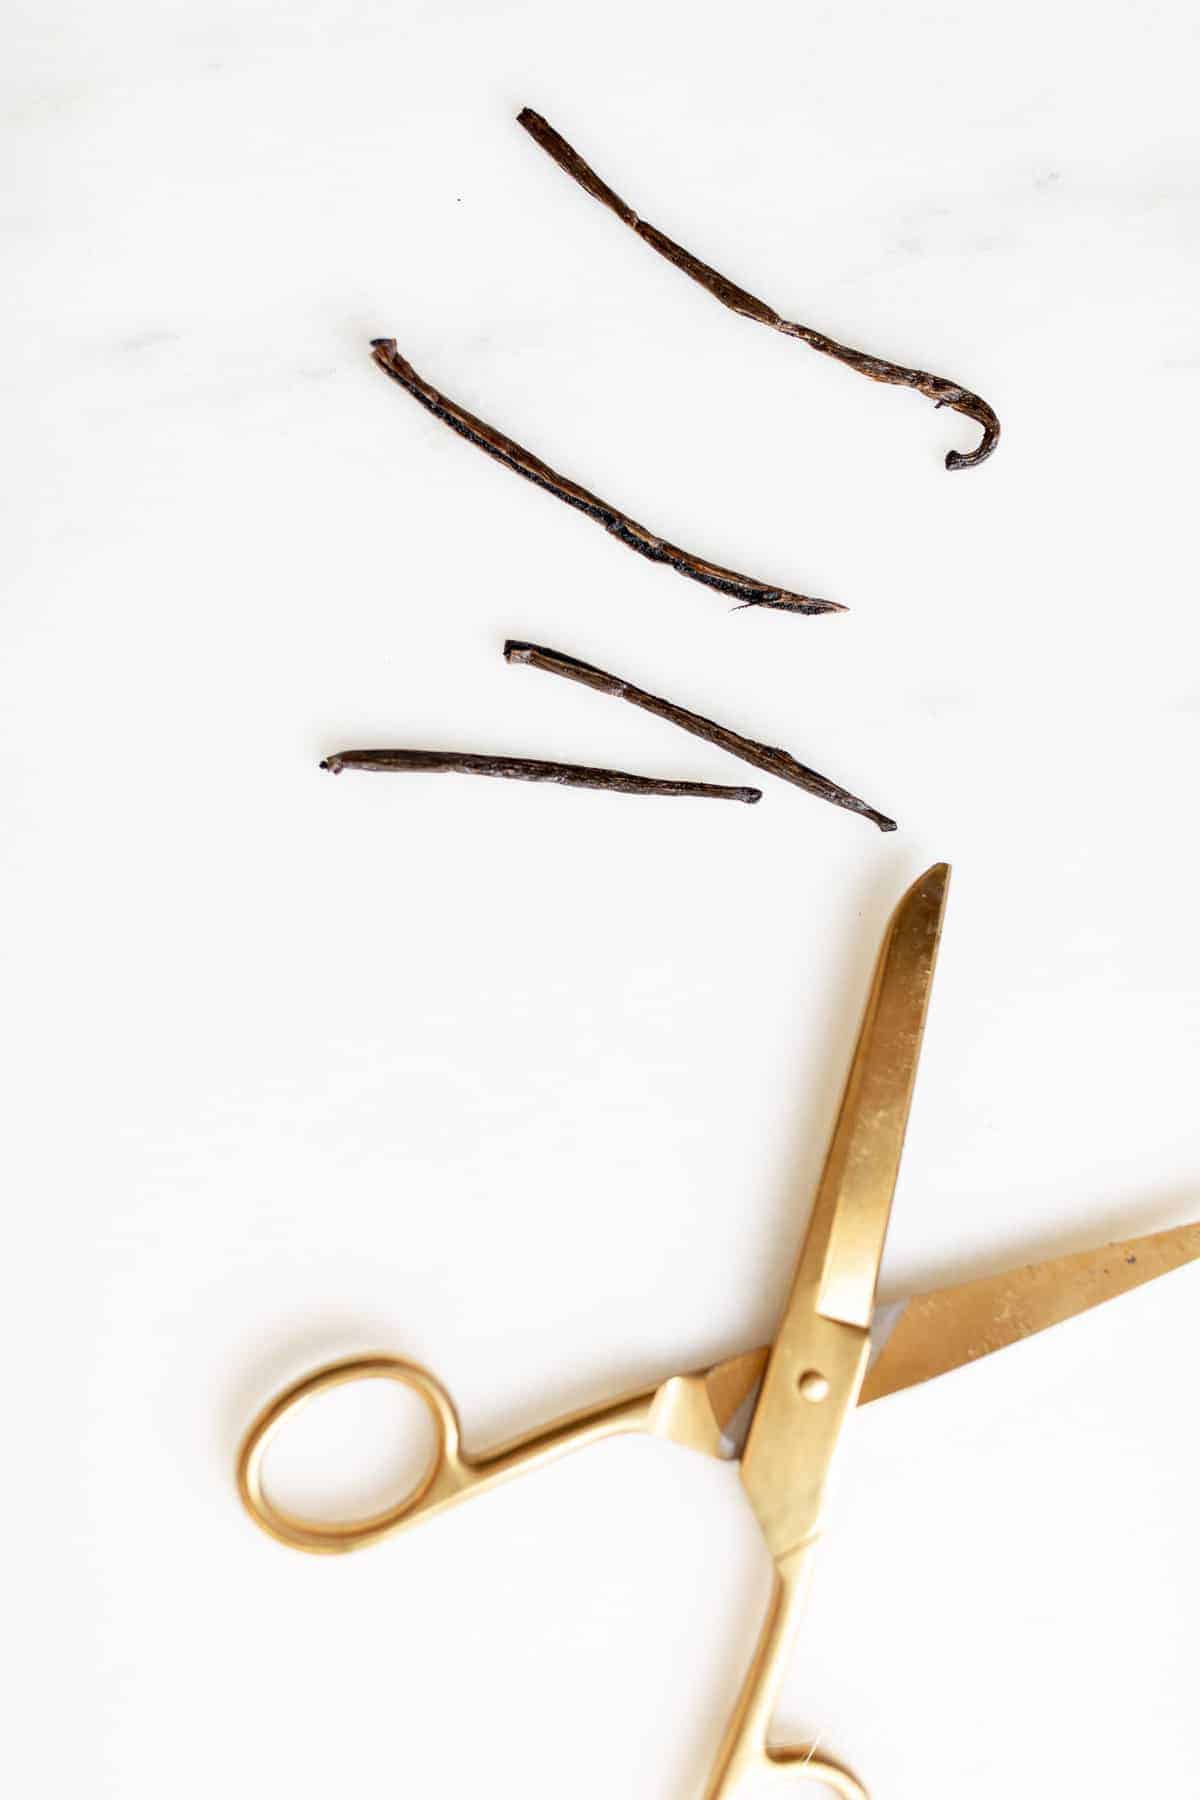 Gold scissors preparing to cut vanilla bean pods. #homemadevanillaextract #homemadevanilla